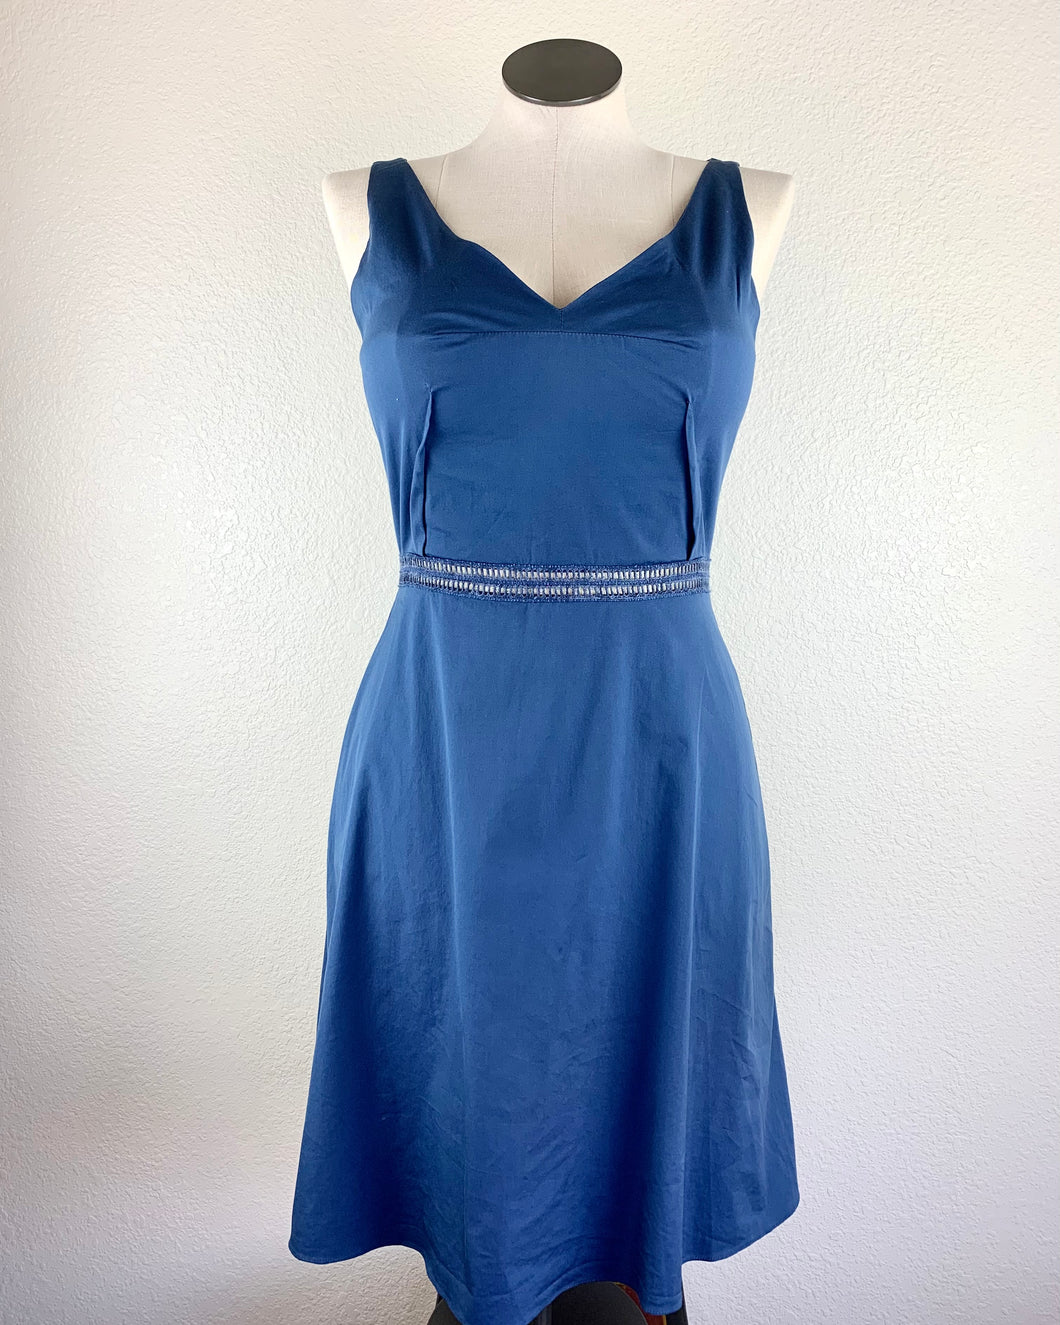 Nonoo Cotton A-line Dress size 8